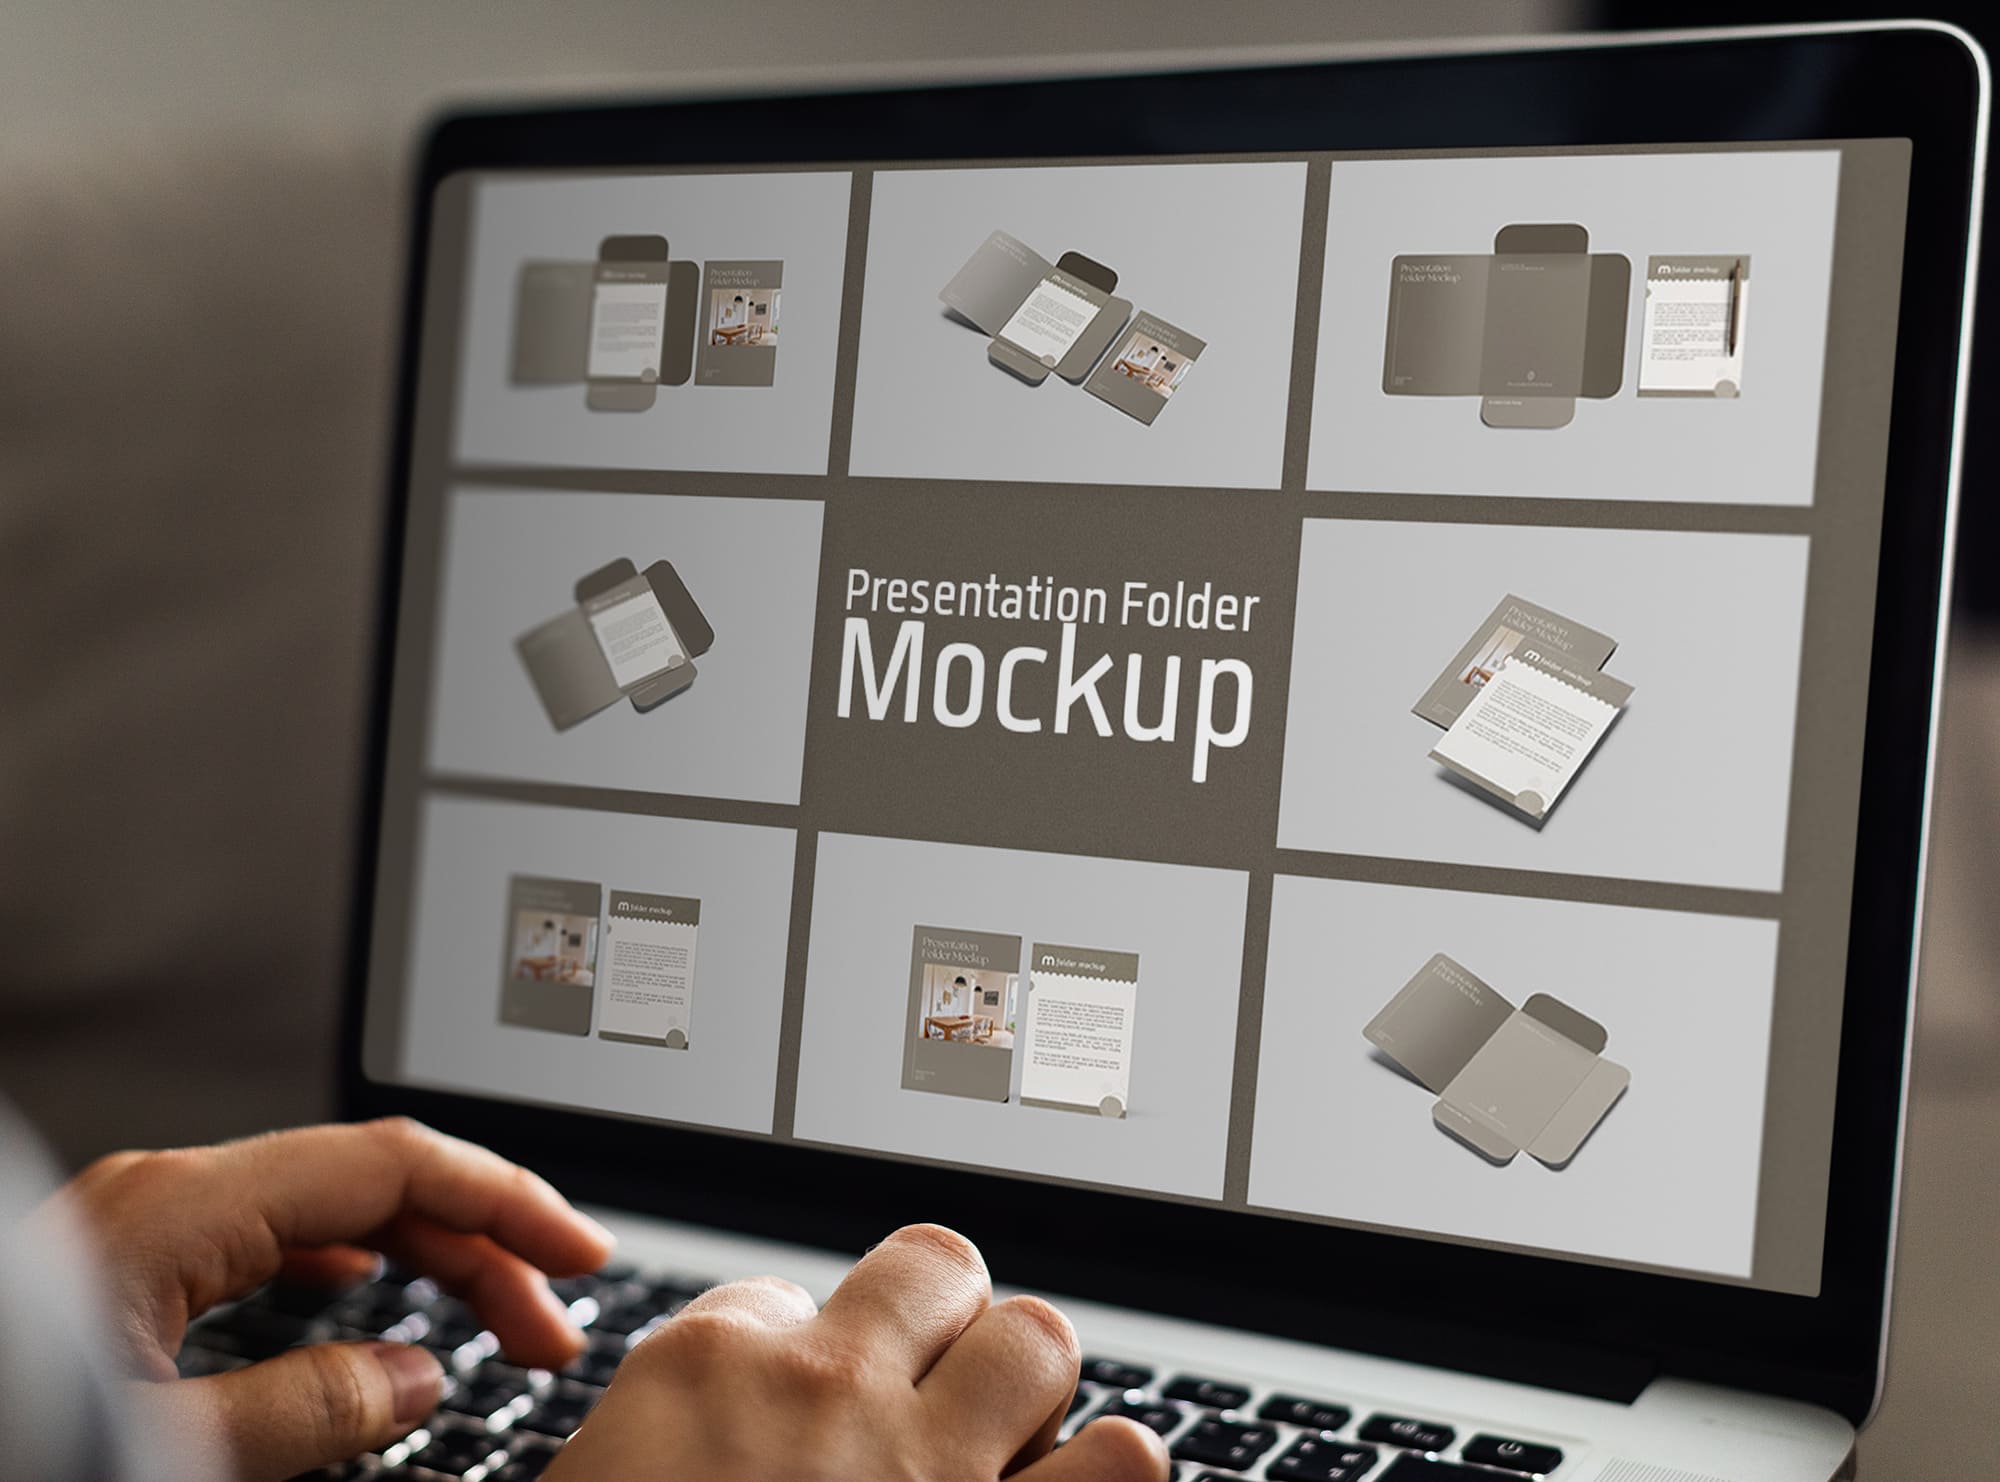 Laptop on screen with images of colorful presentation folder mockups.